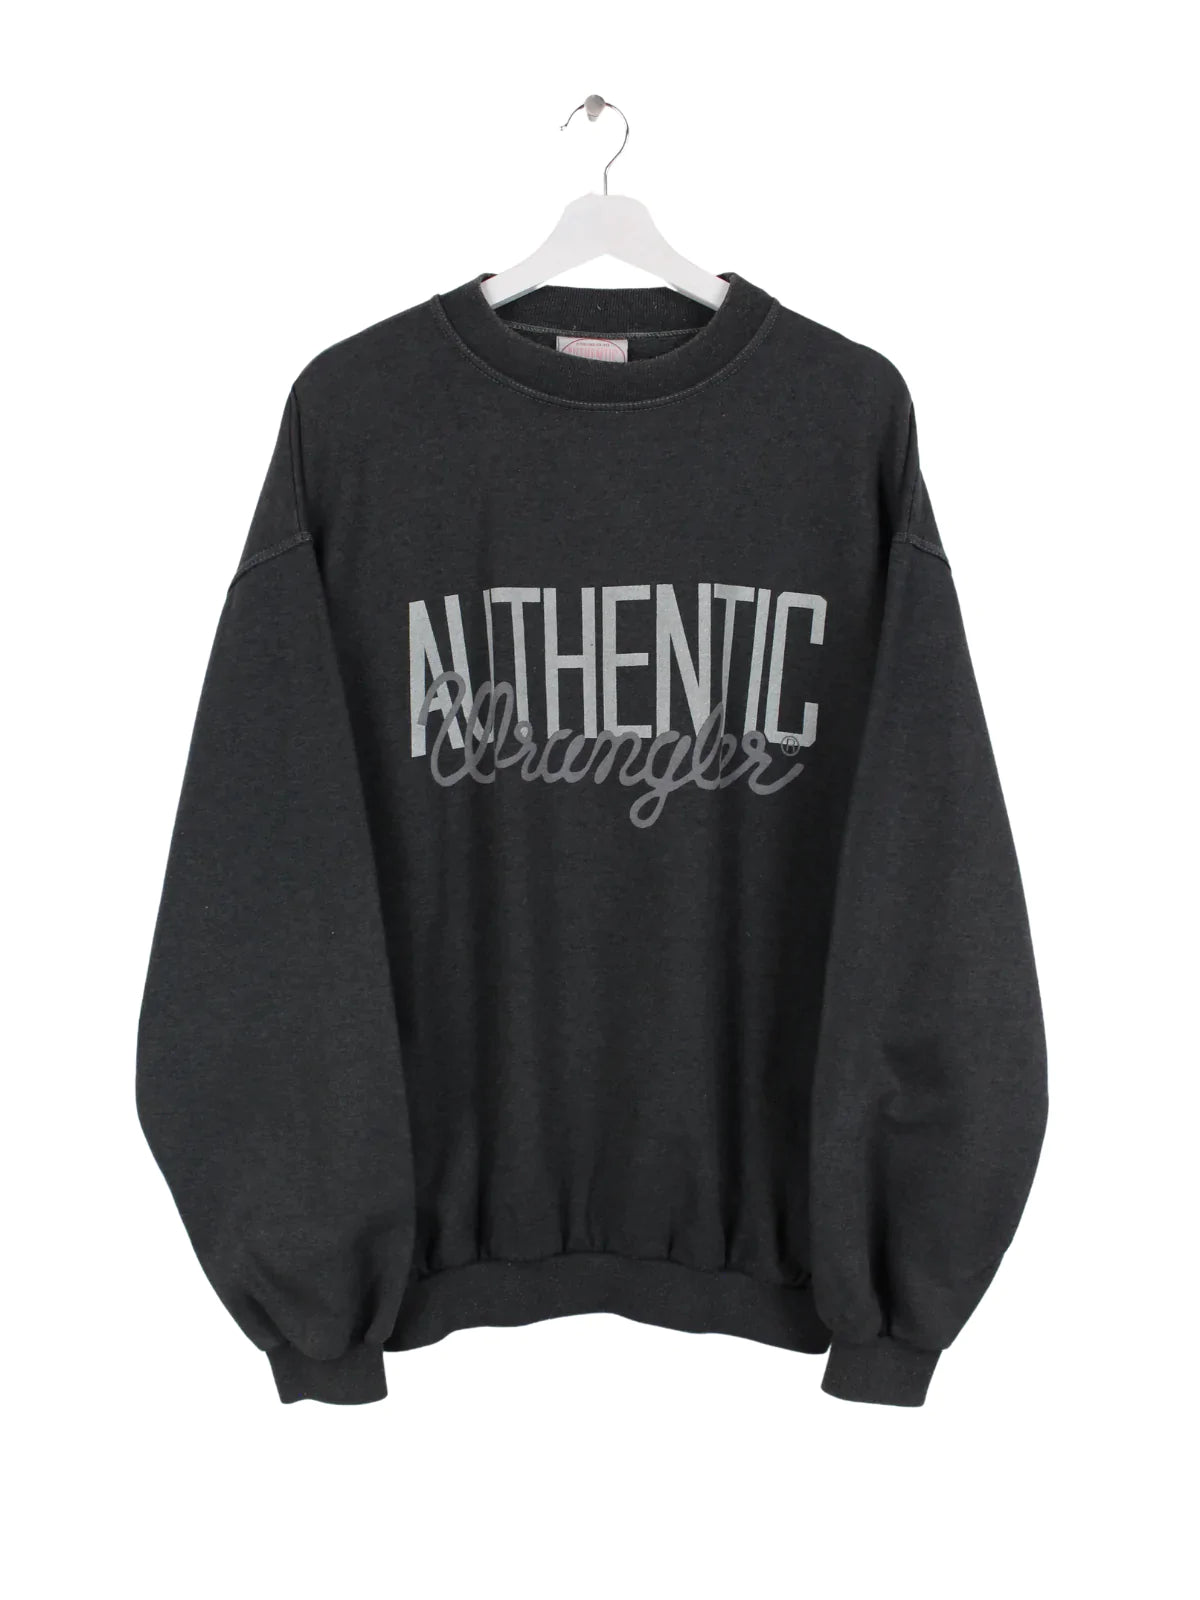 Authentic Wrangler Sweater Grau XL